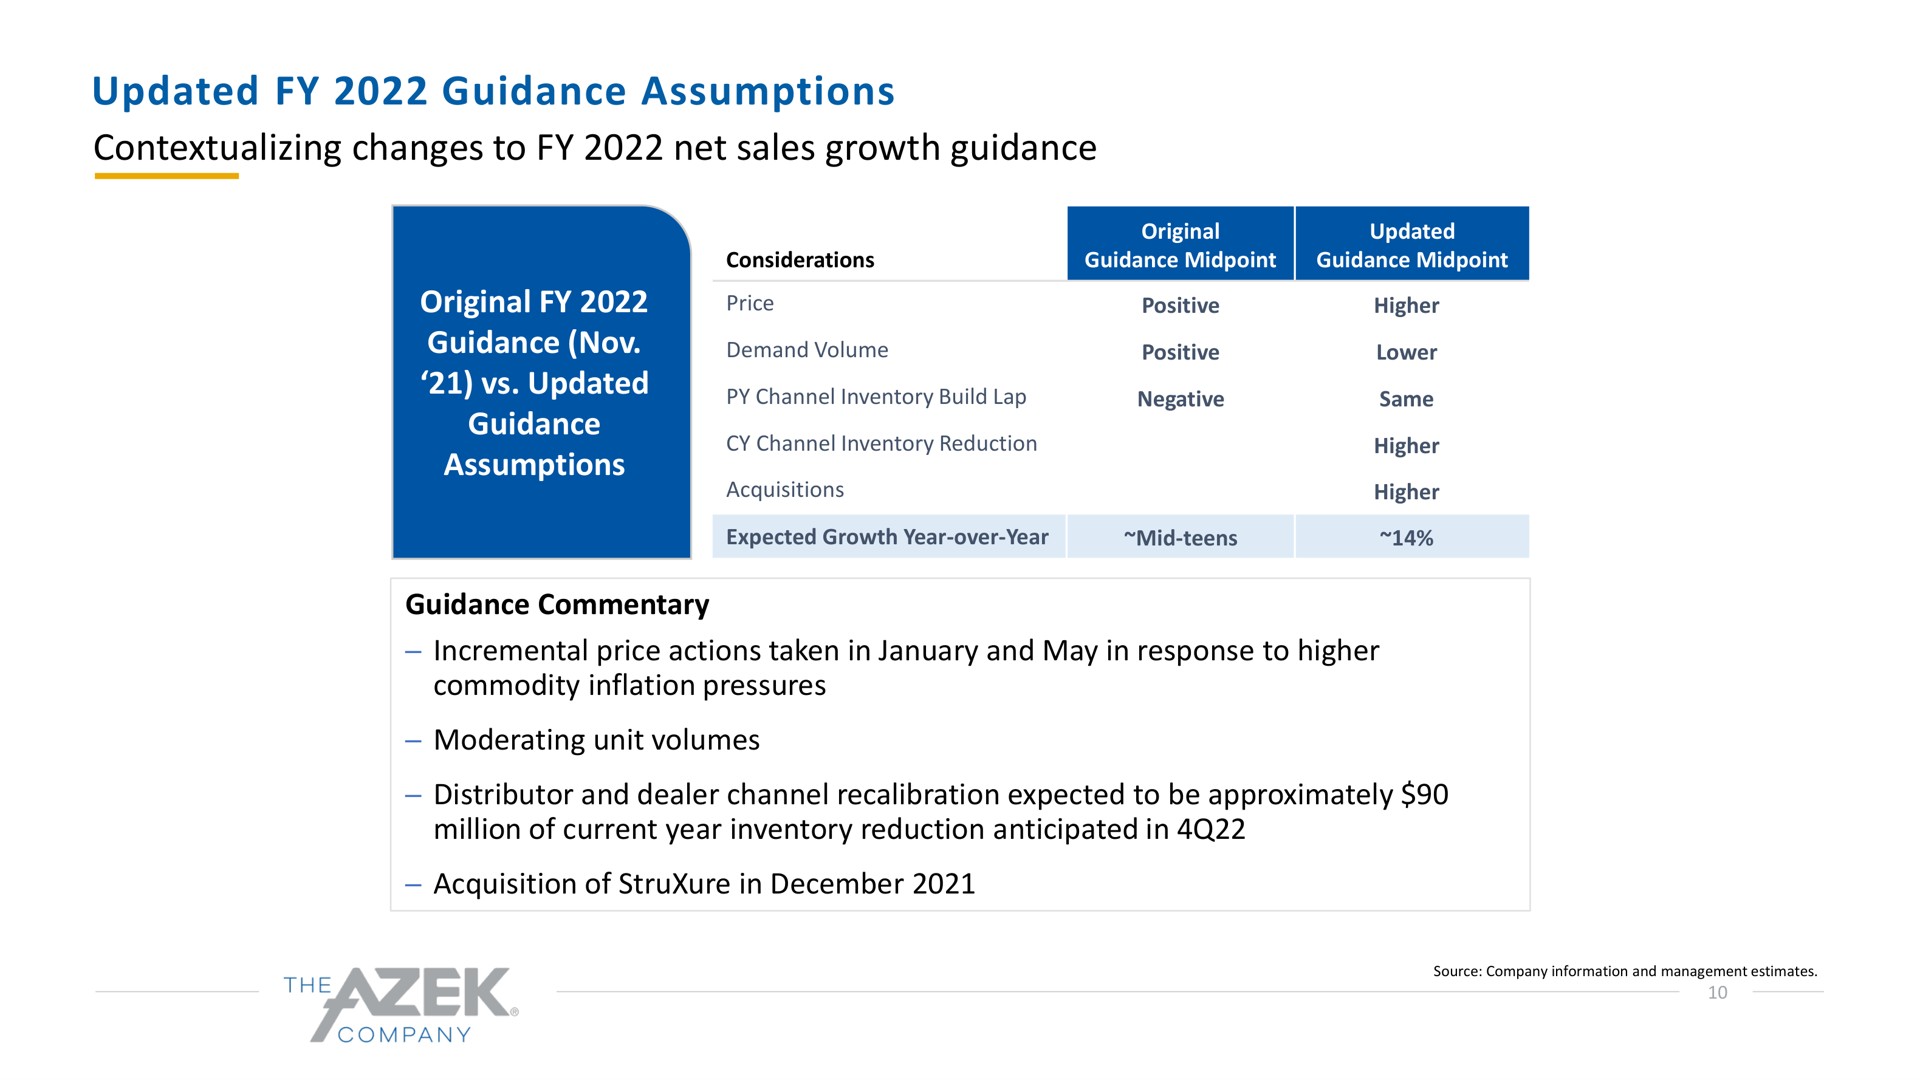 updated guidance assumptions changes to net sales growth guidance | Azek